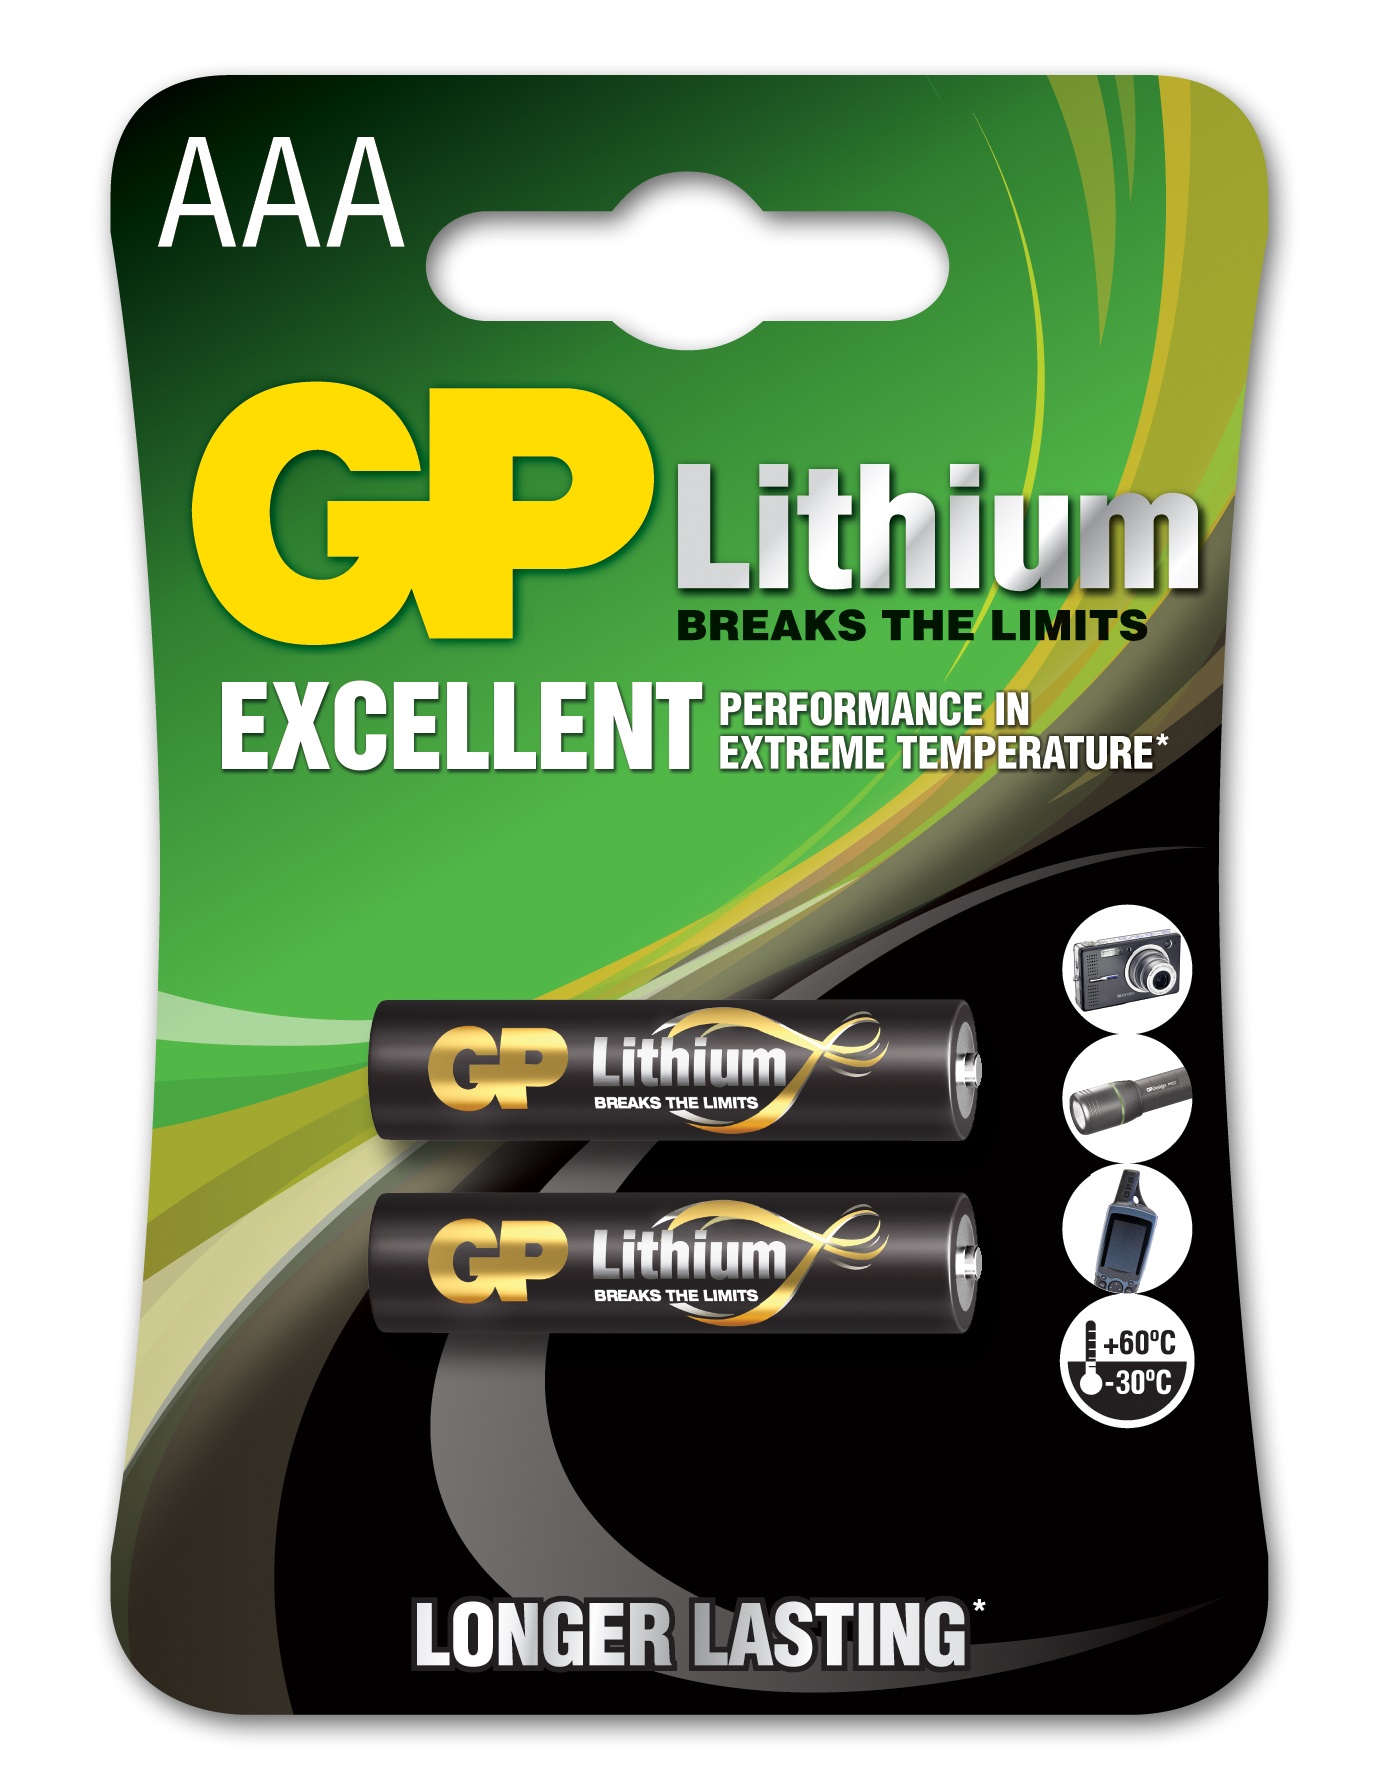 Gp lithium aaa